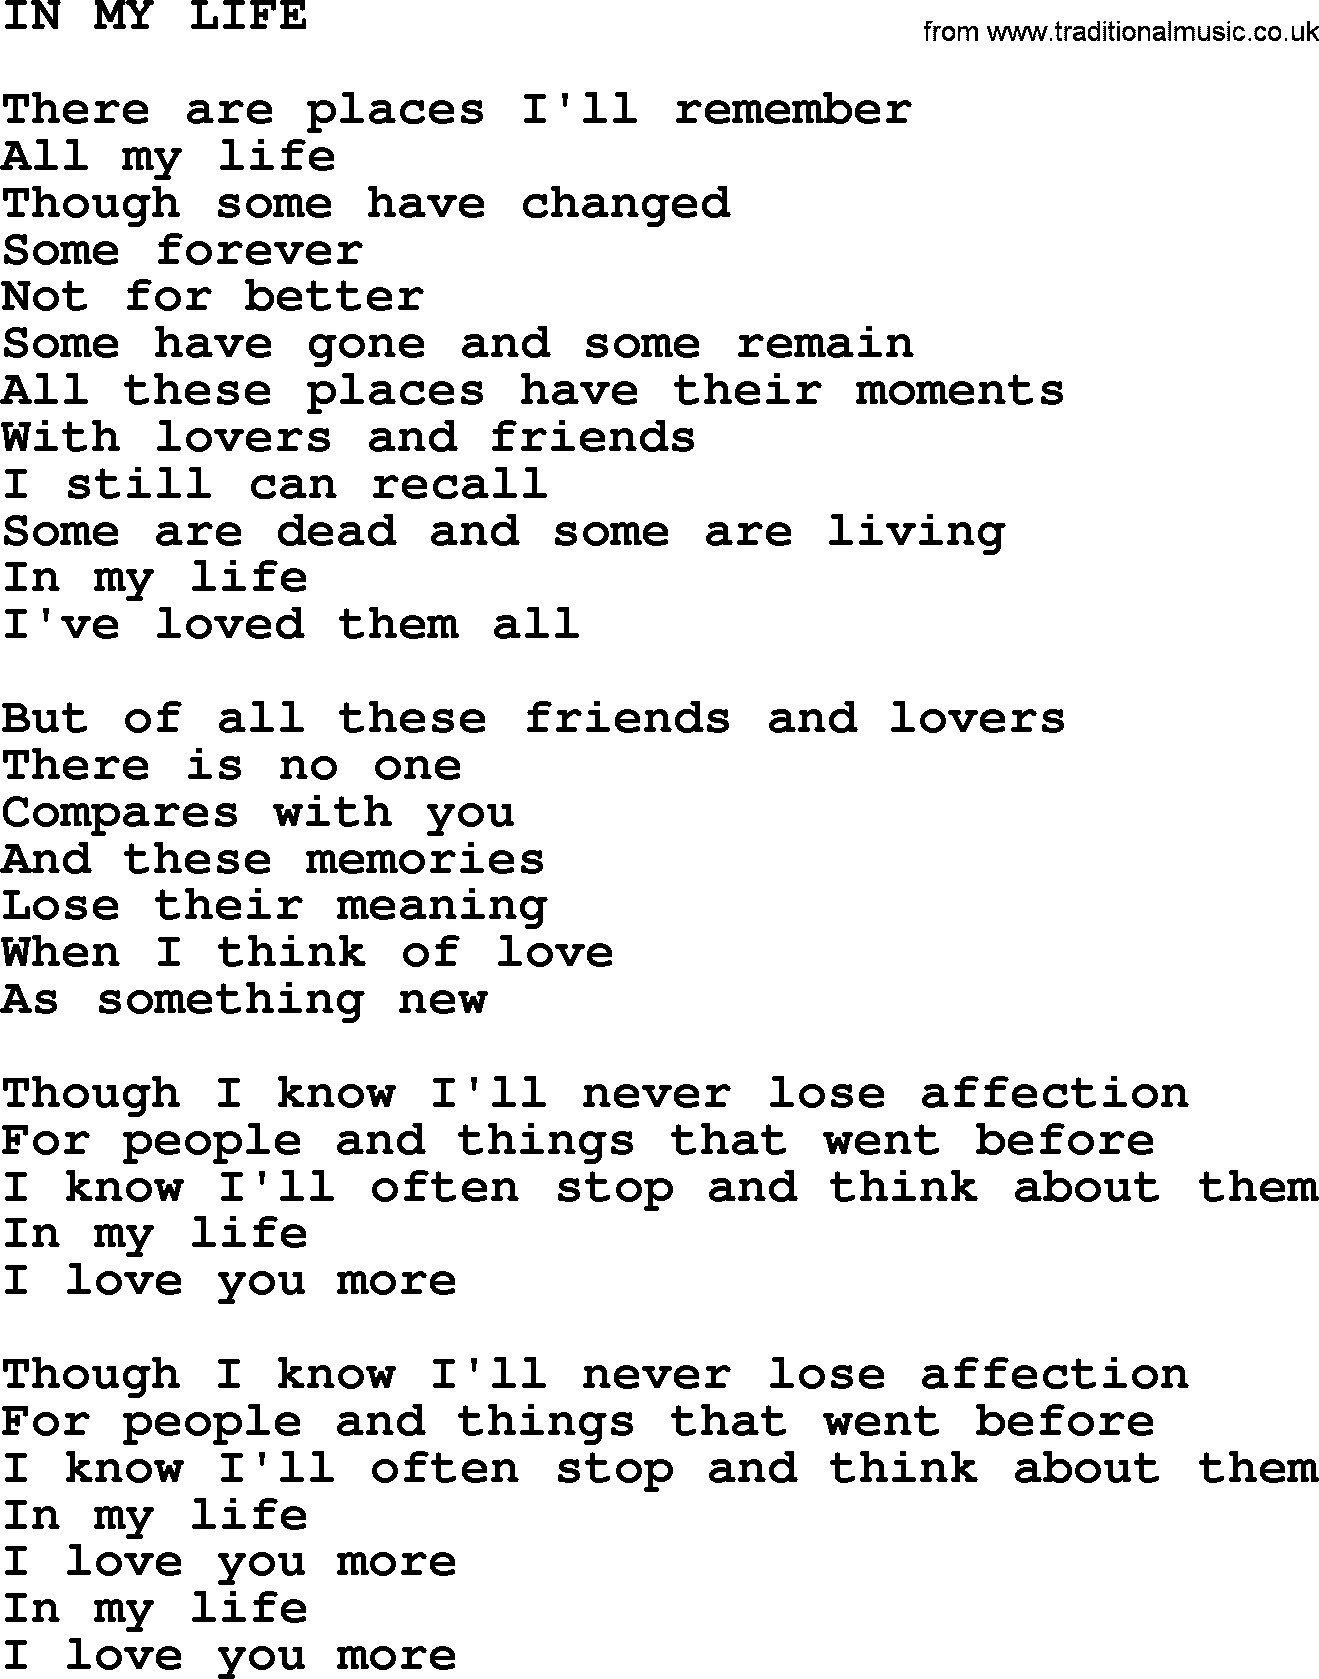 Johnny Cash song In My Life.txt lyrics